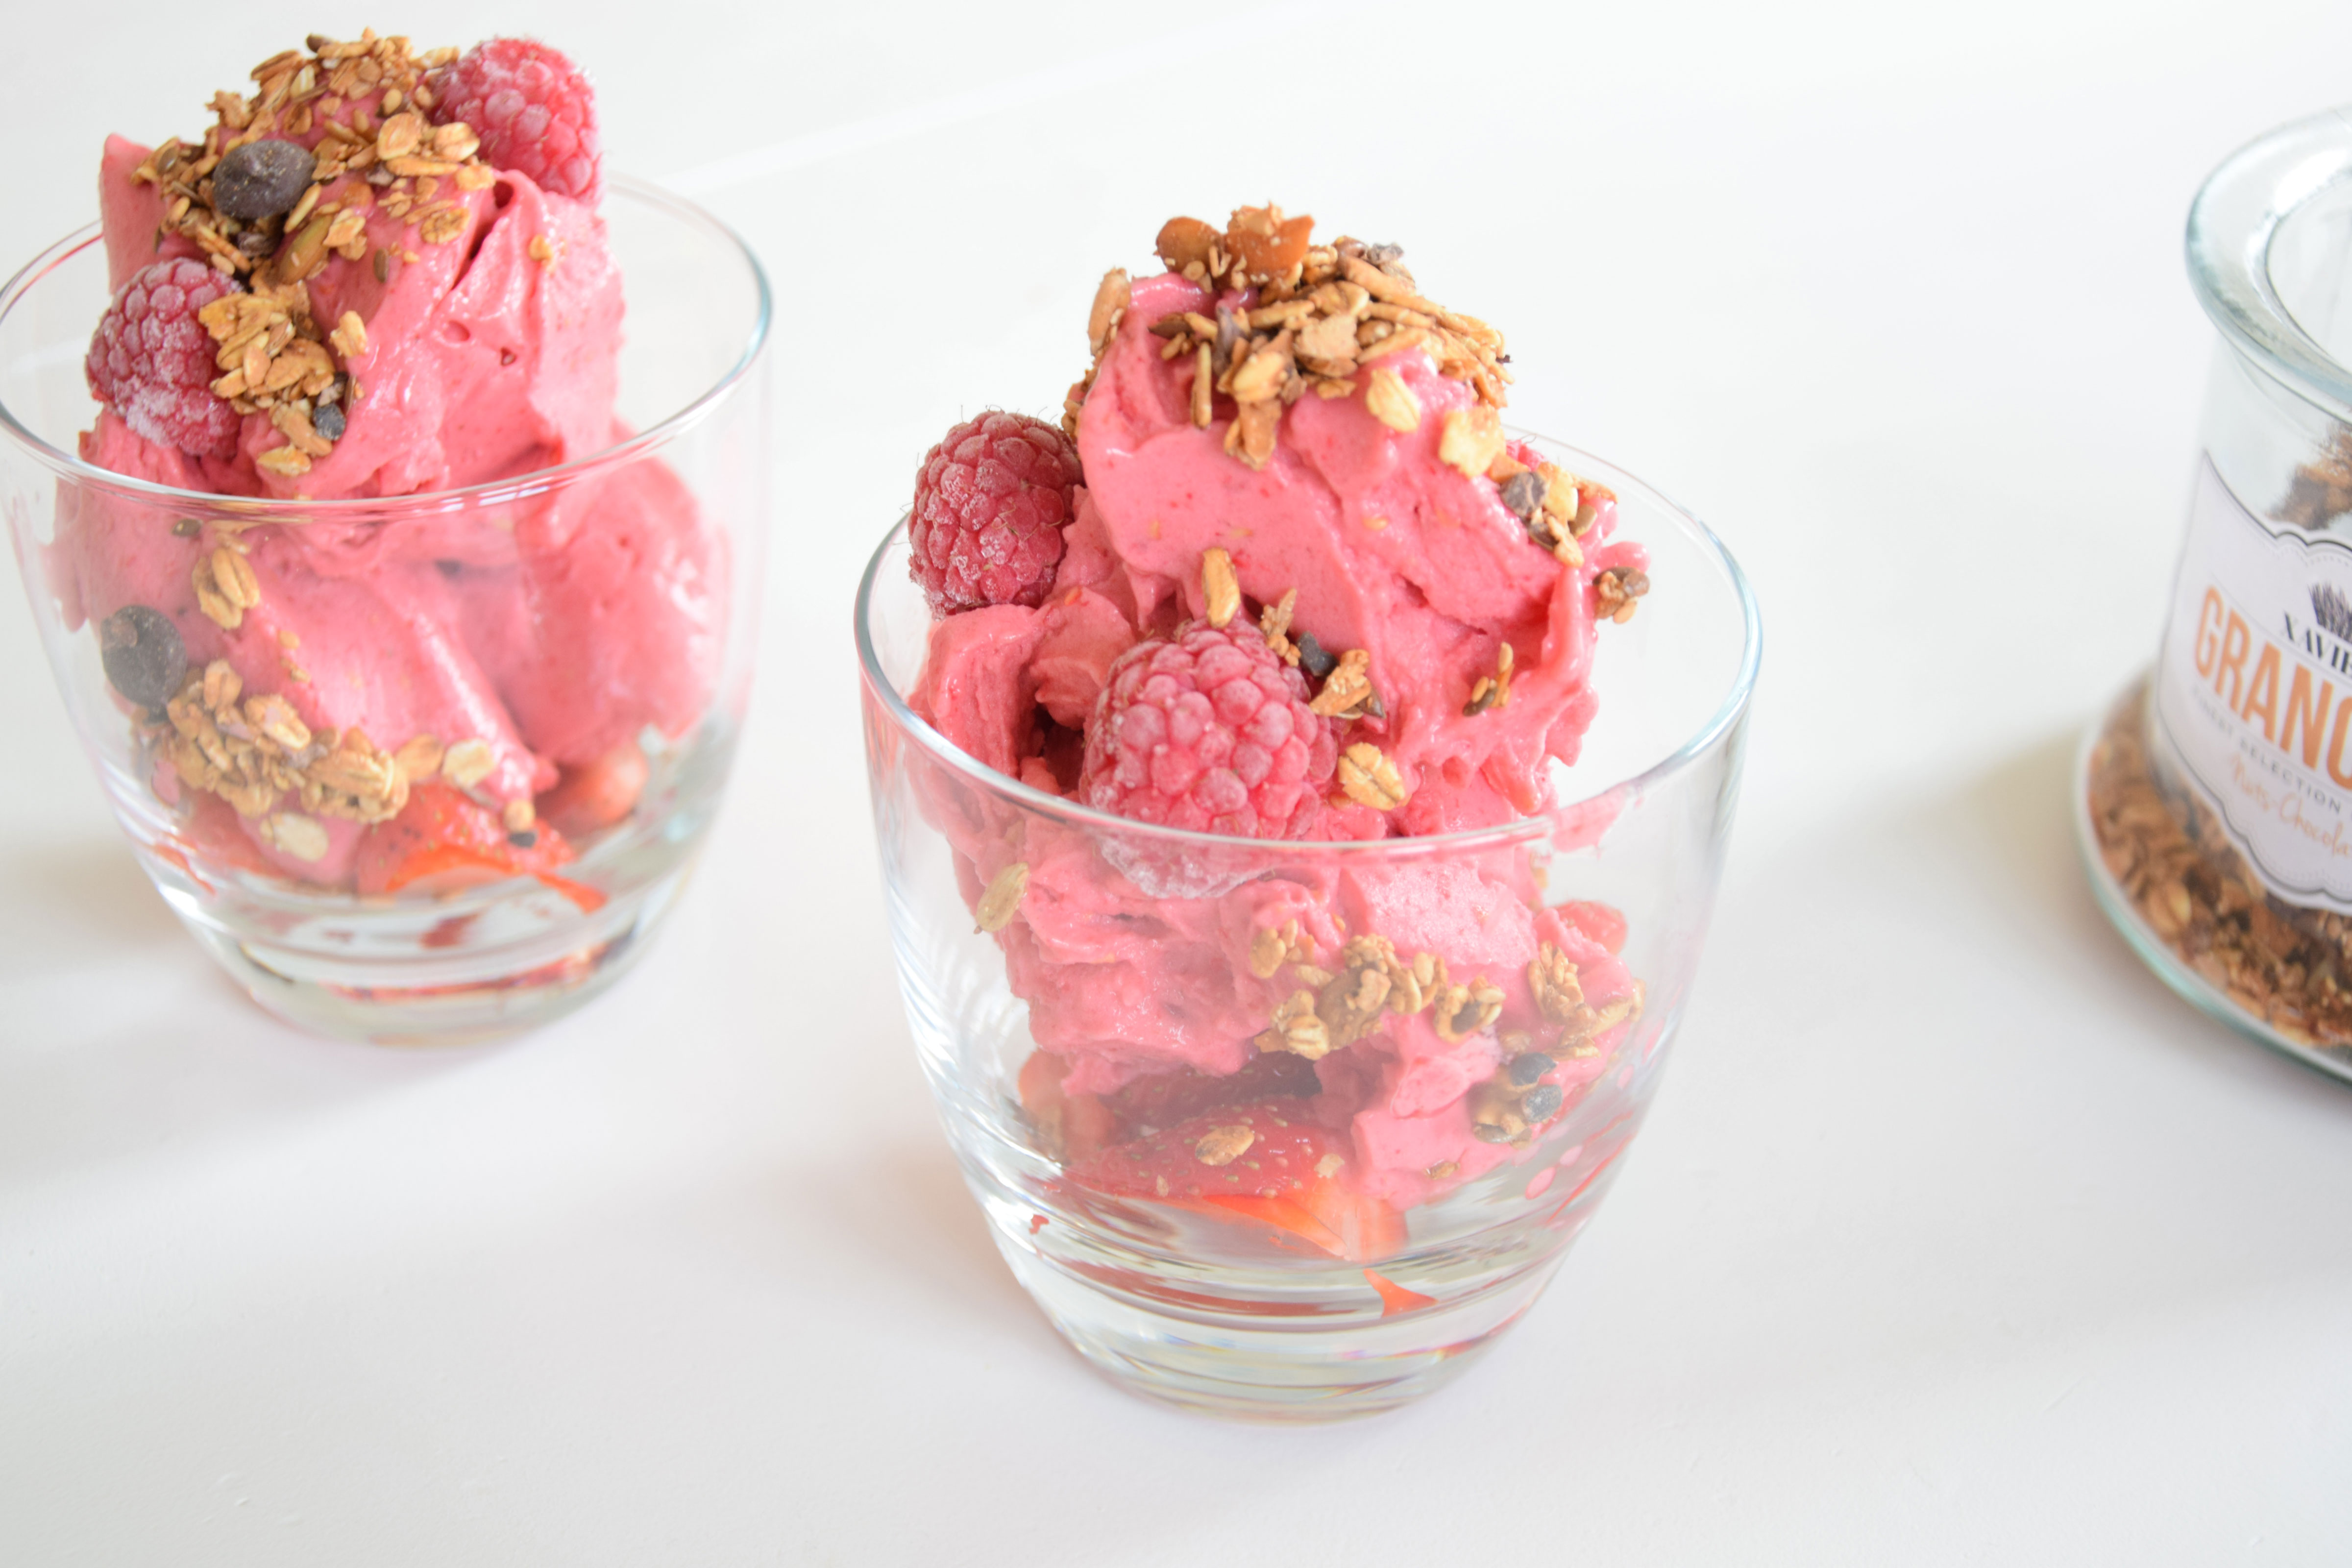 Raspberry nicecream with XAVIES' granola topping - XAVIES’